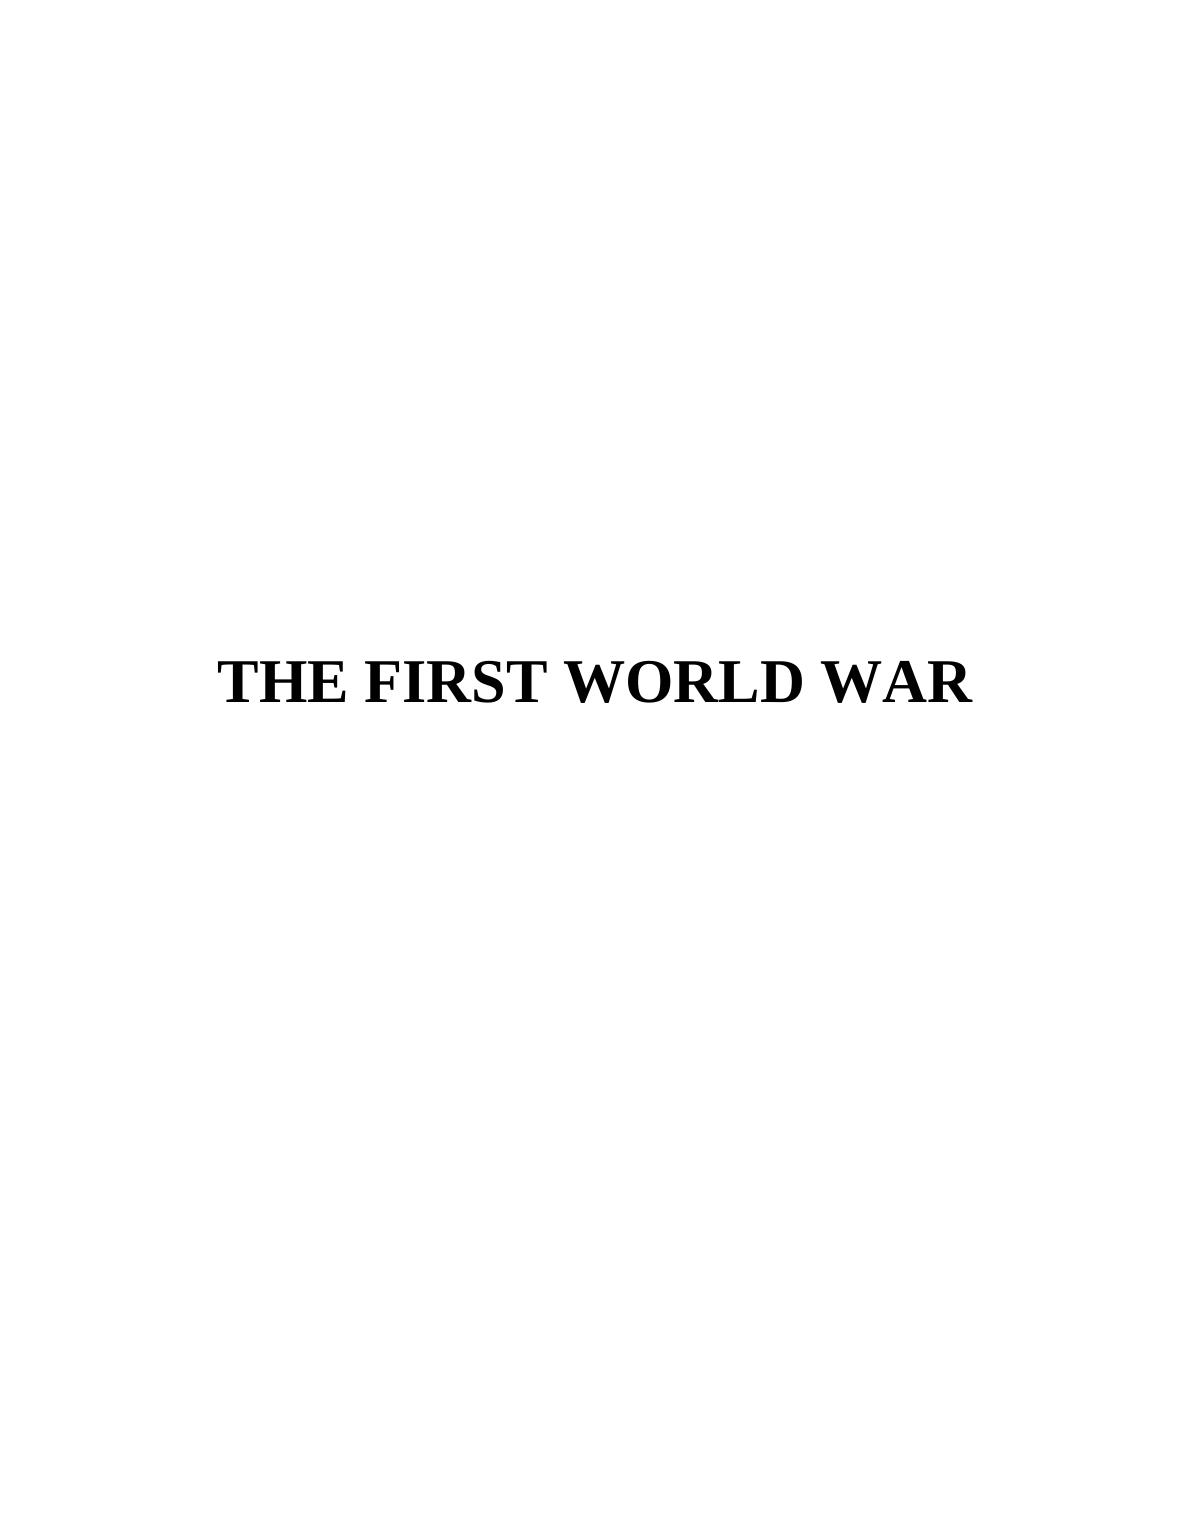 The First World - Assignment_1